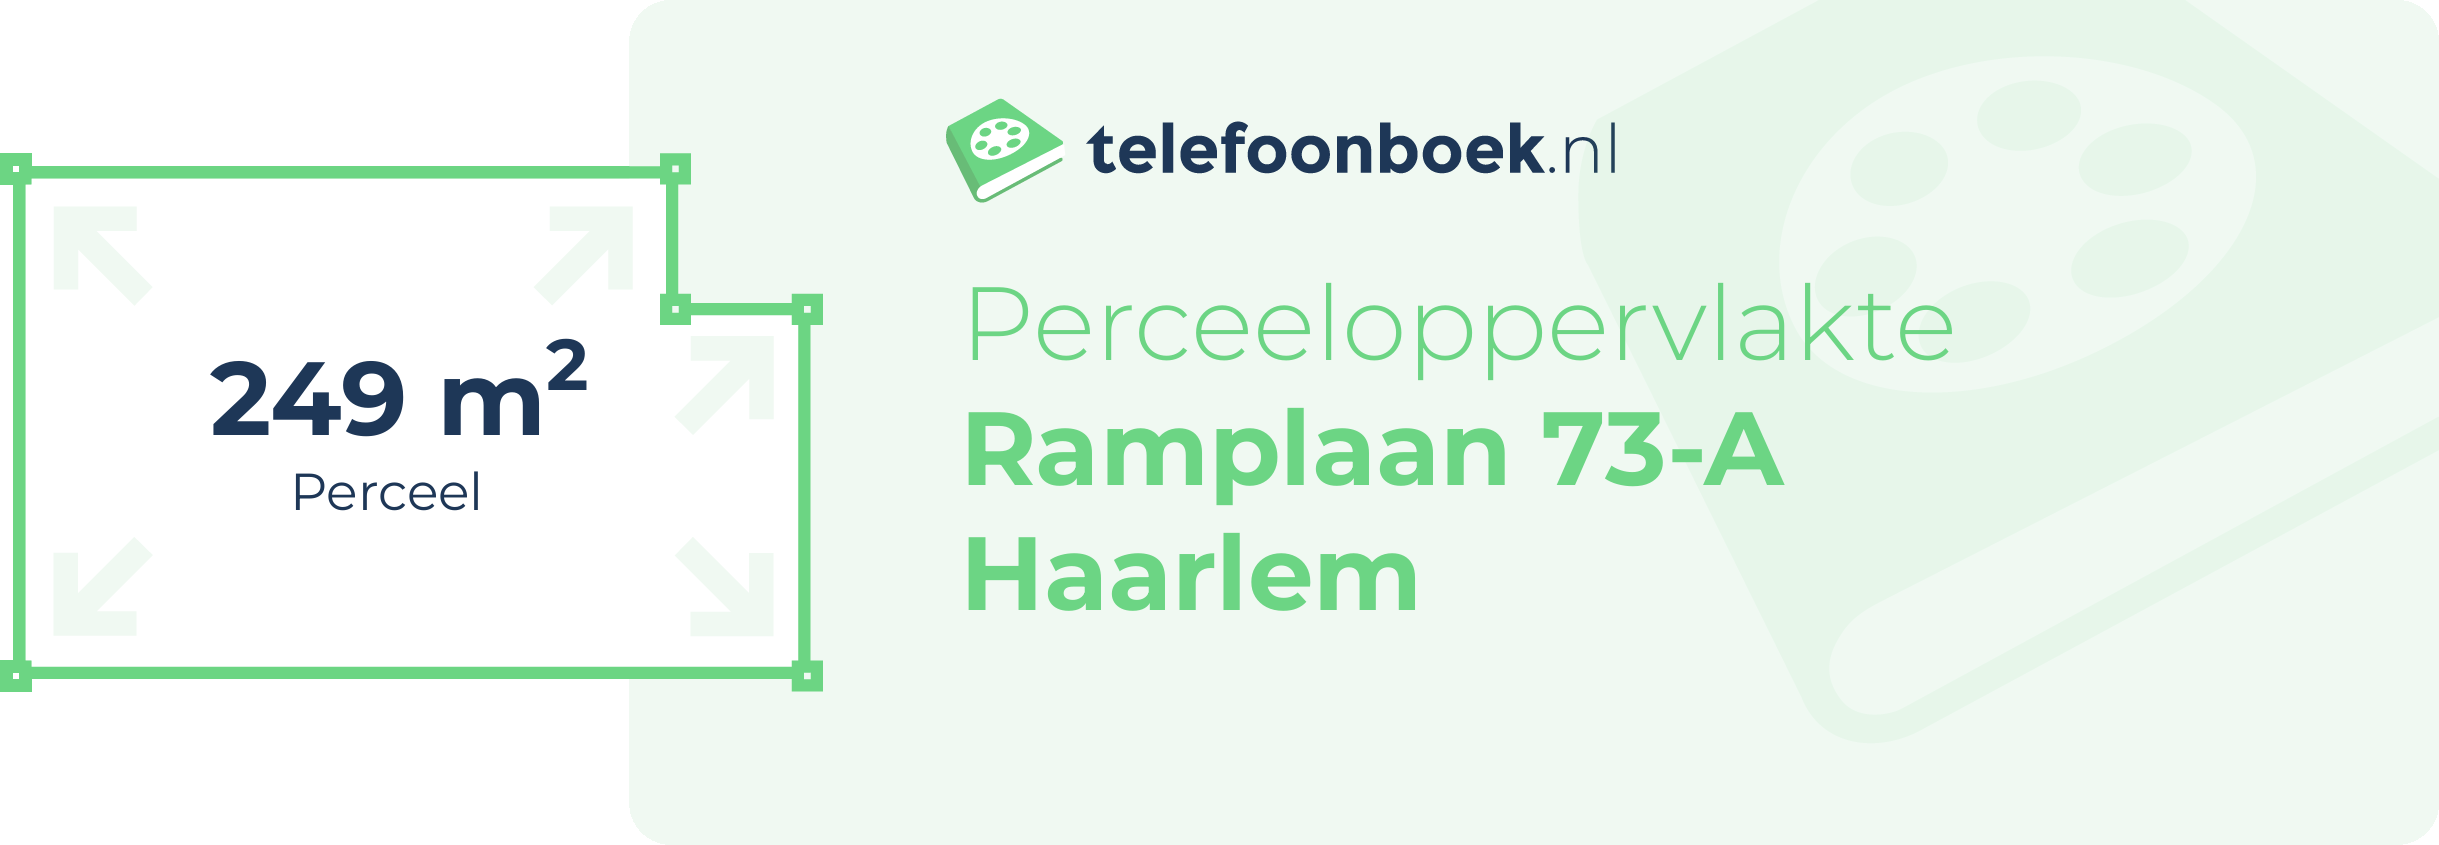 Perceeloppervlakte Ramplaan 73-A Haarlem